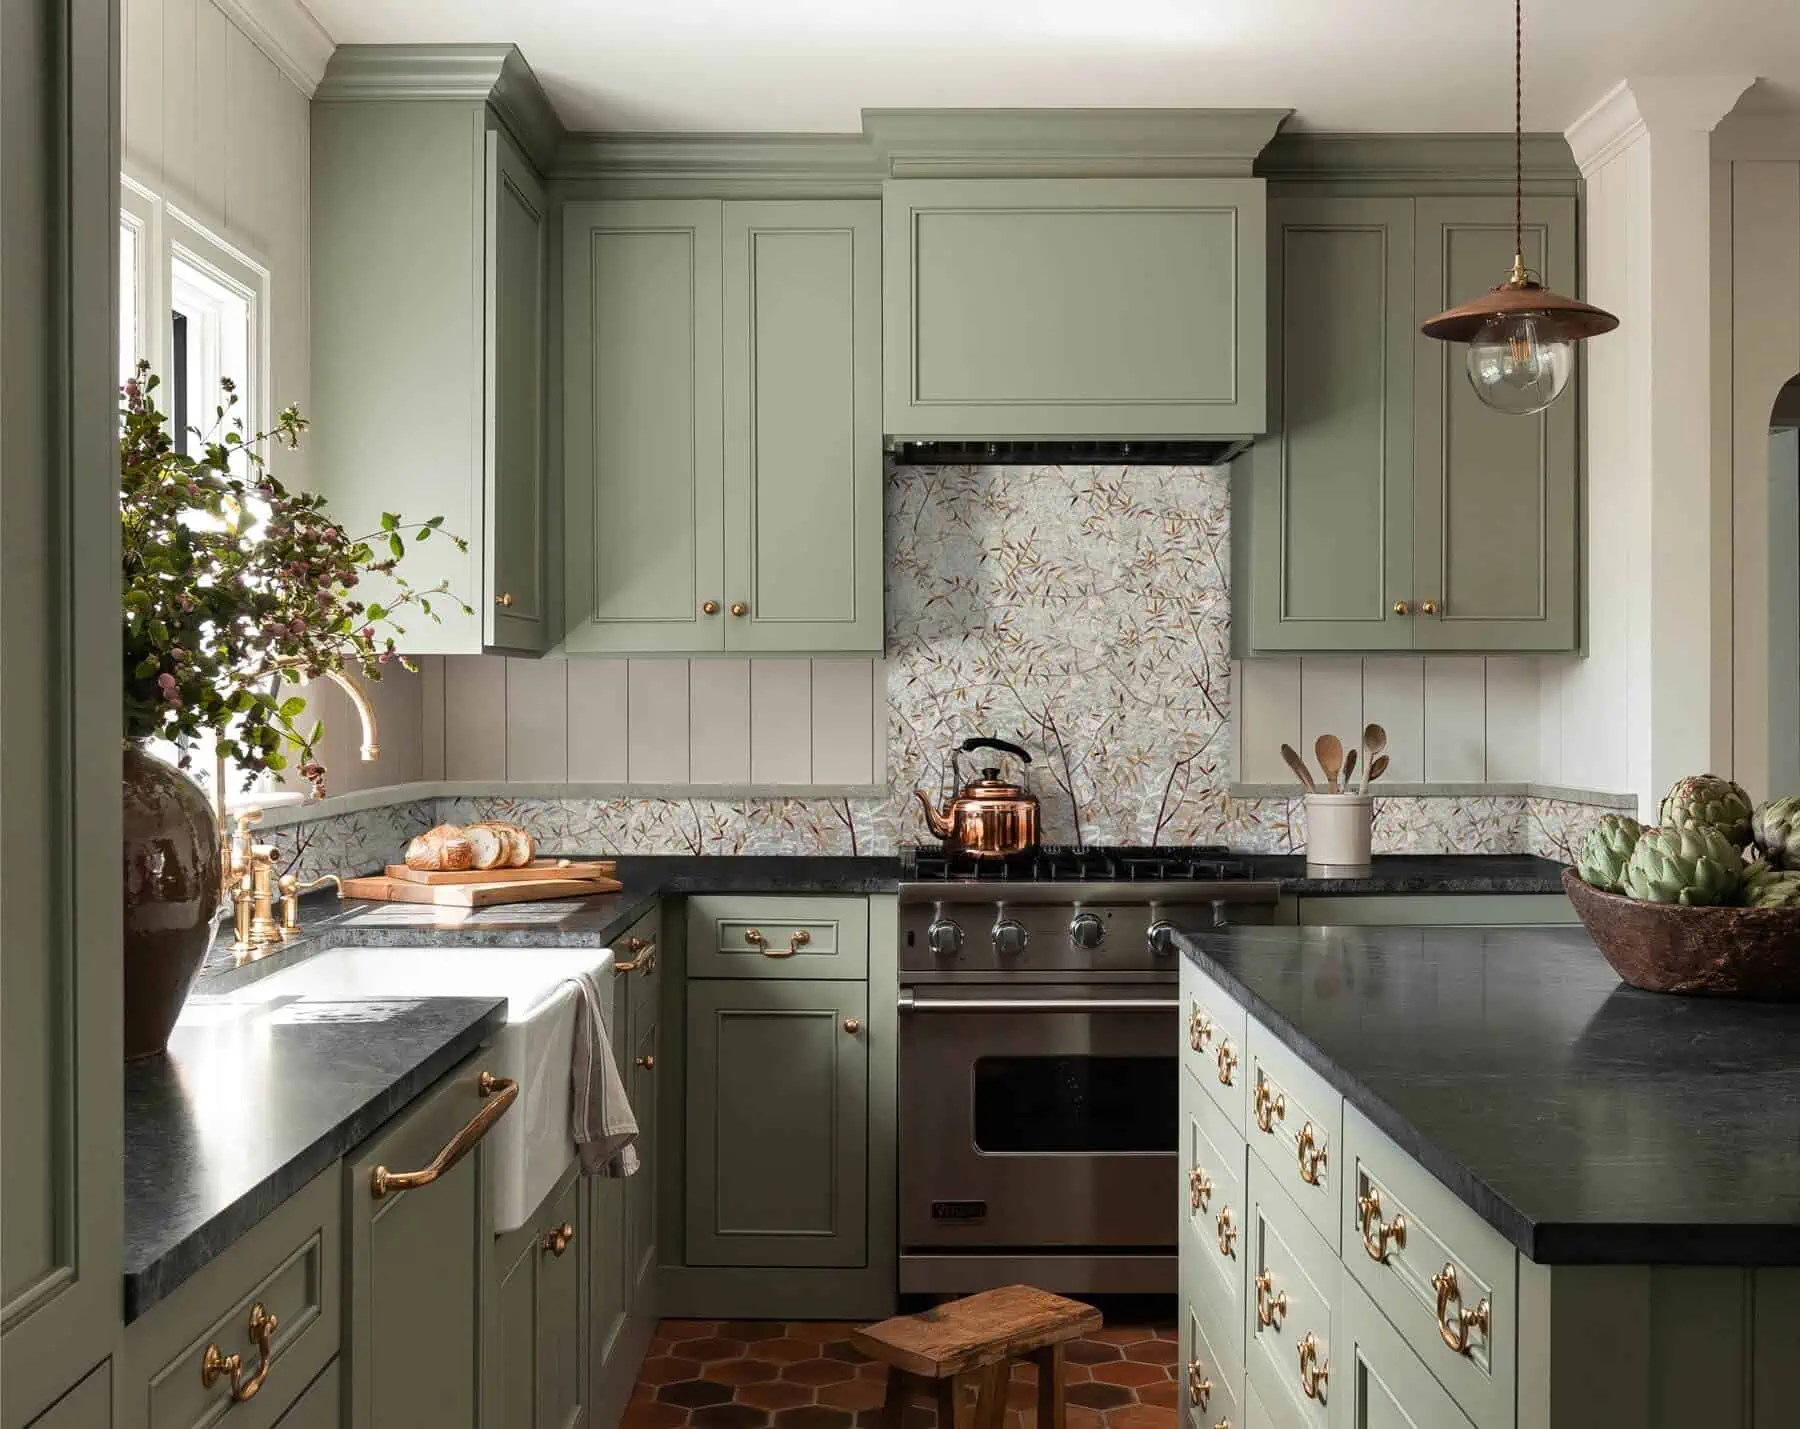 13 Stunning Mosaic Tile Kitchen Backsplash Ideas - MEC - Bespoke Luxury  Mosaics